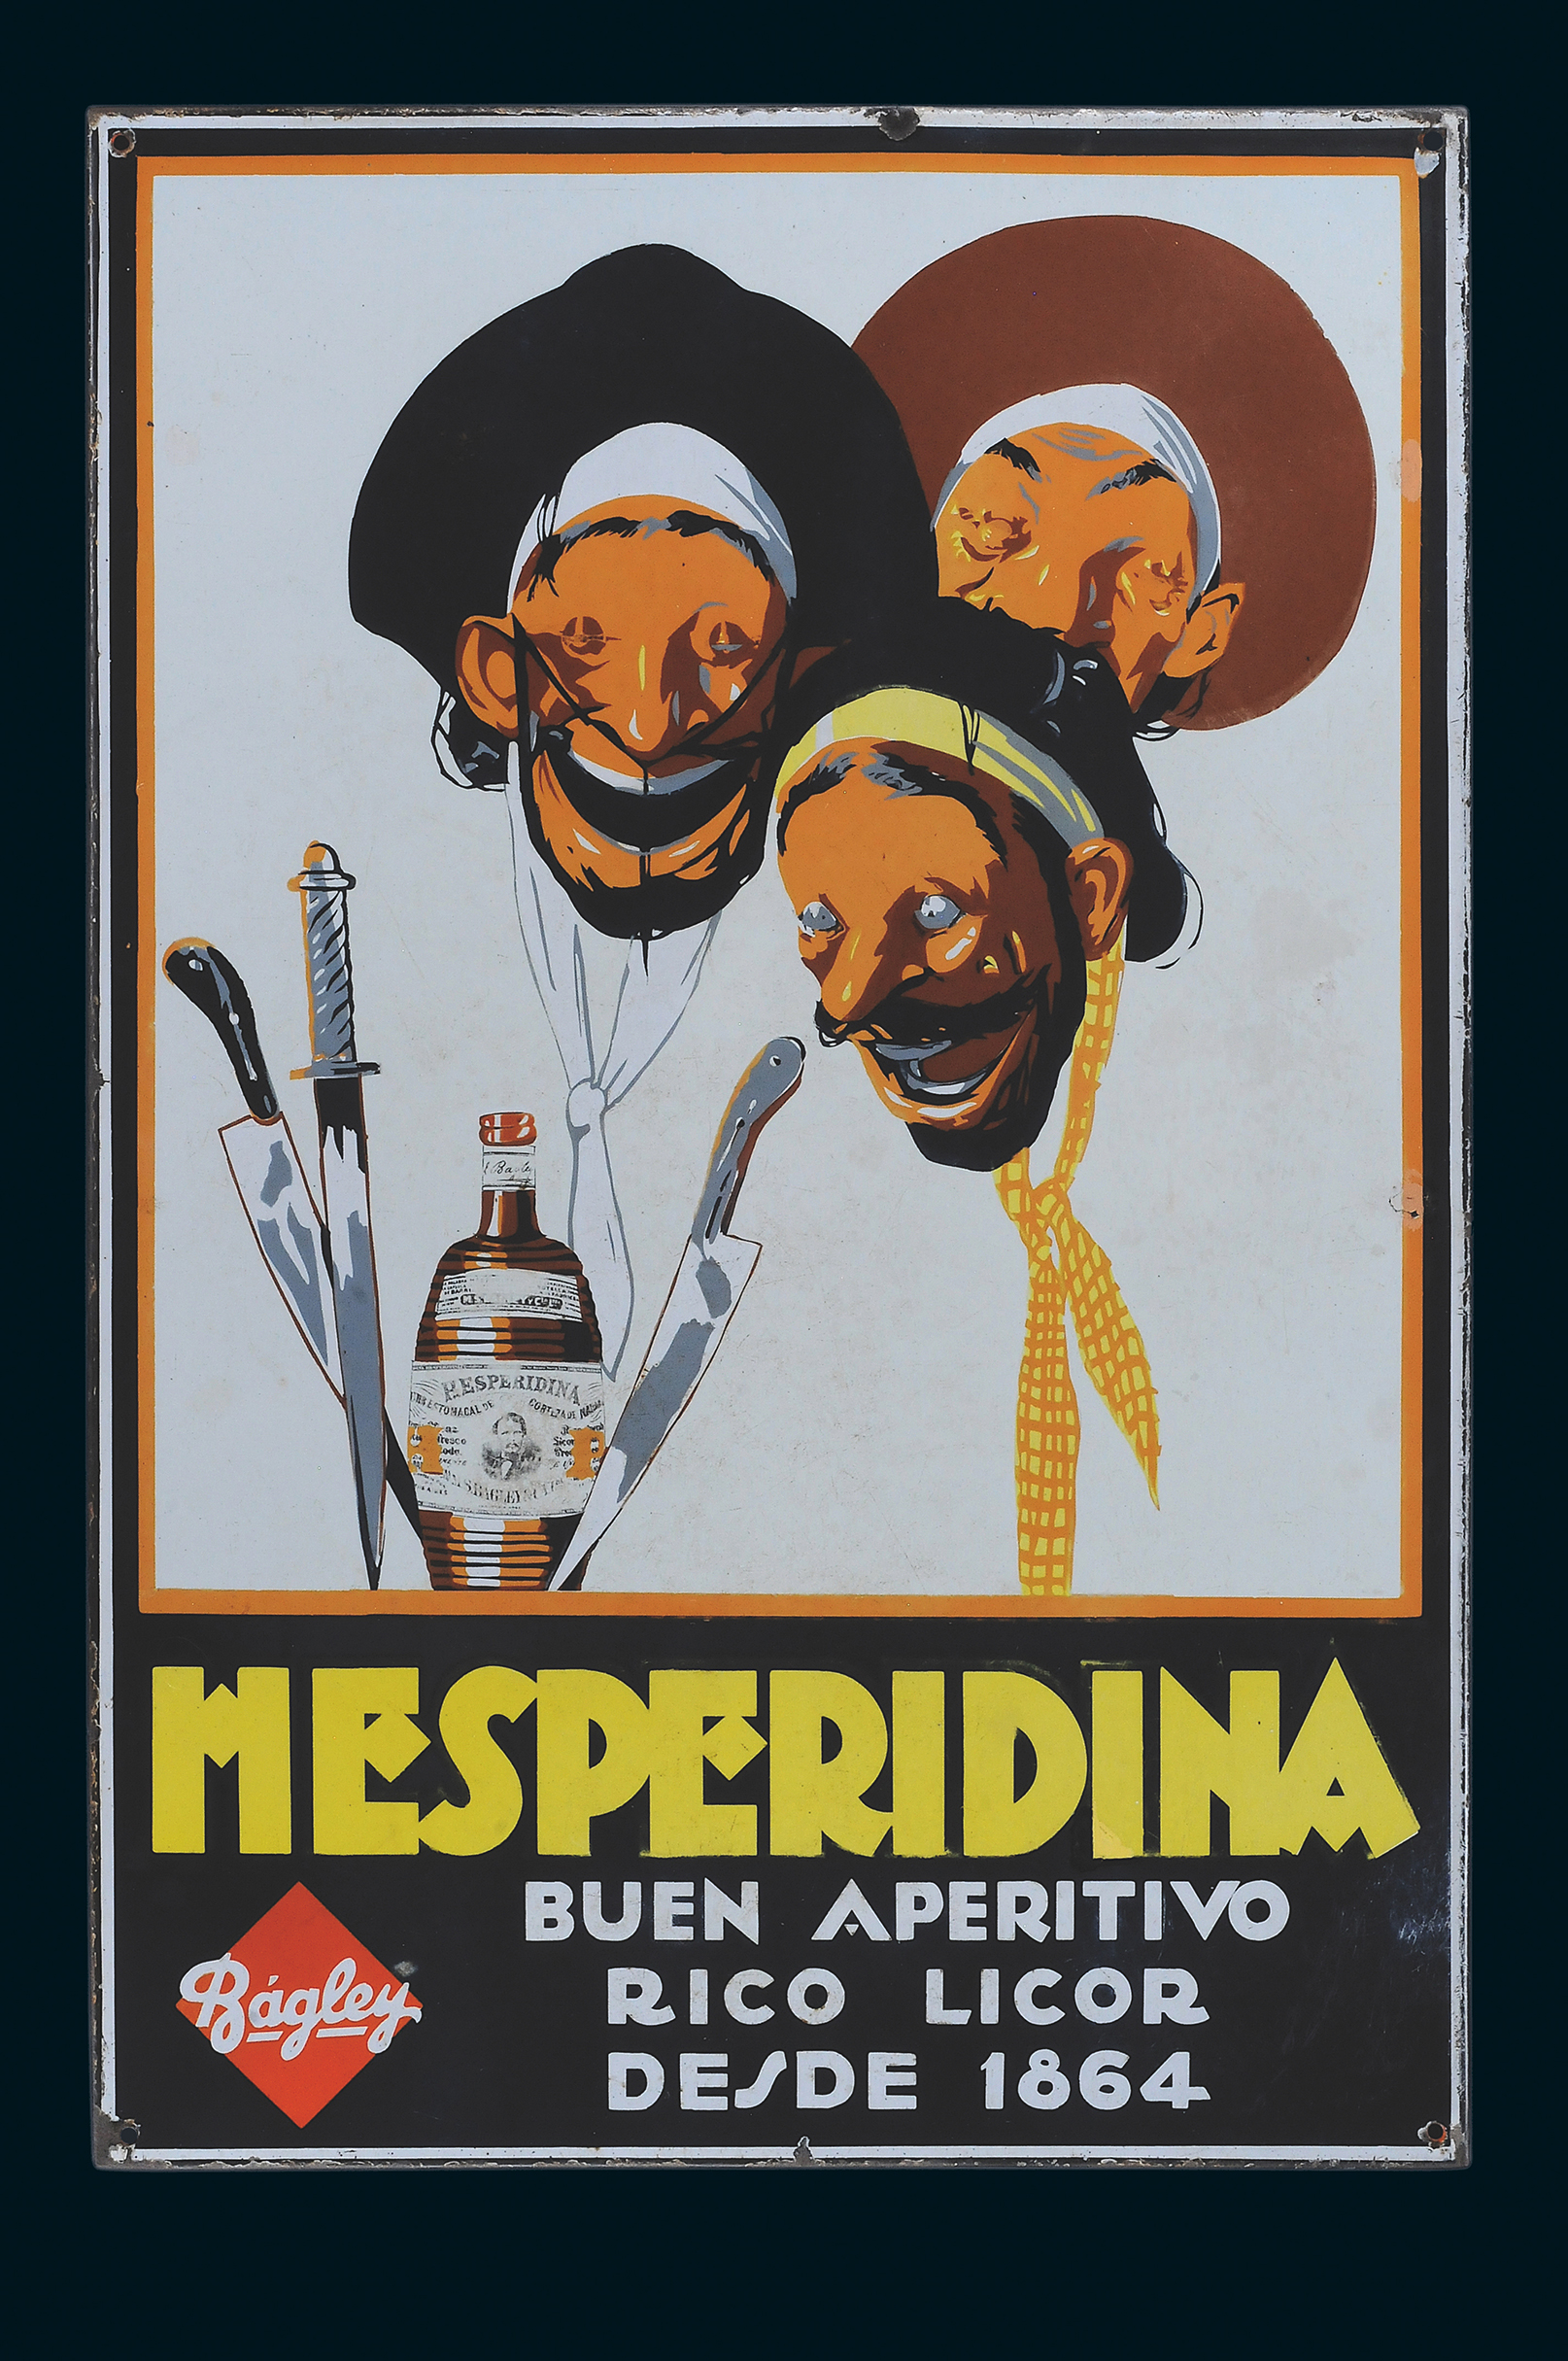 Hesperidina Aperitivo Licor - Image 4 of 4